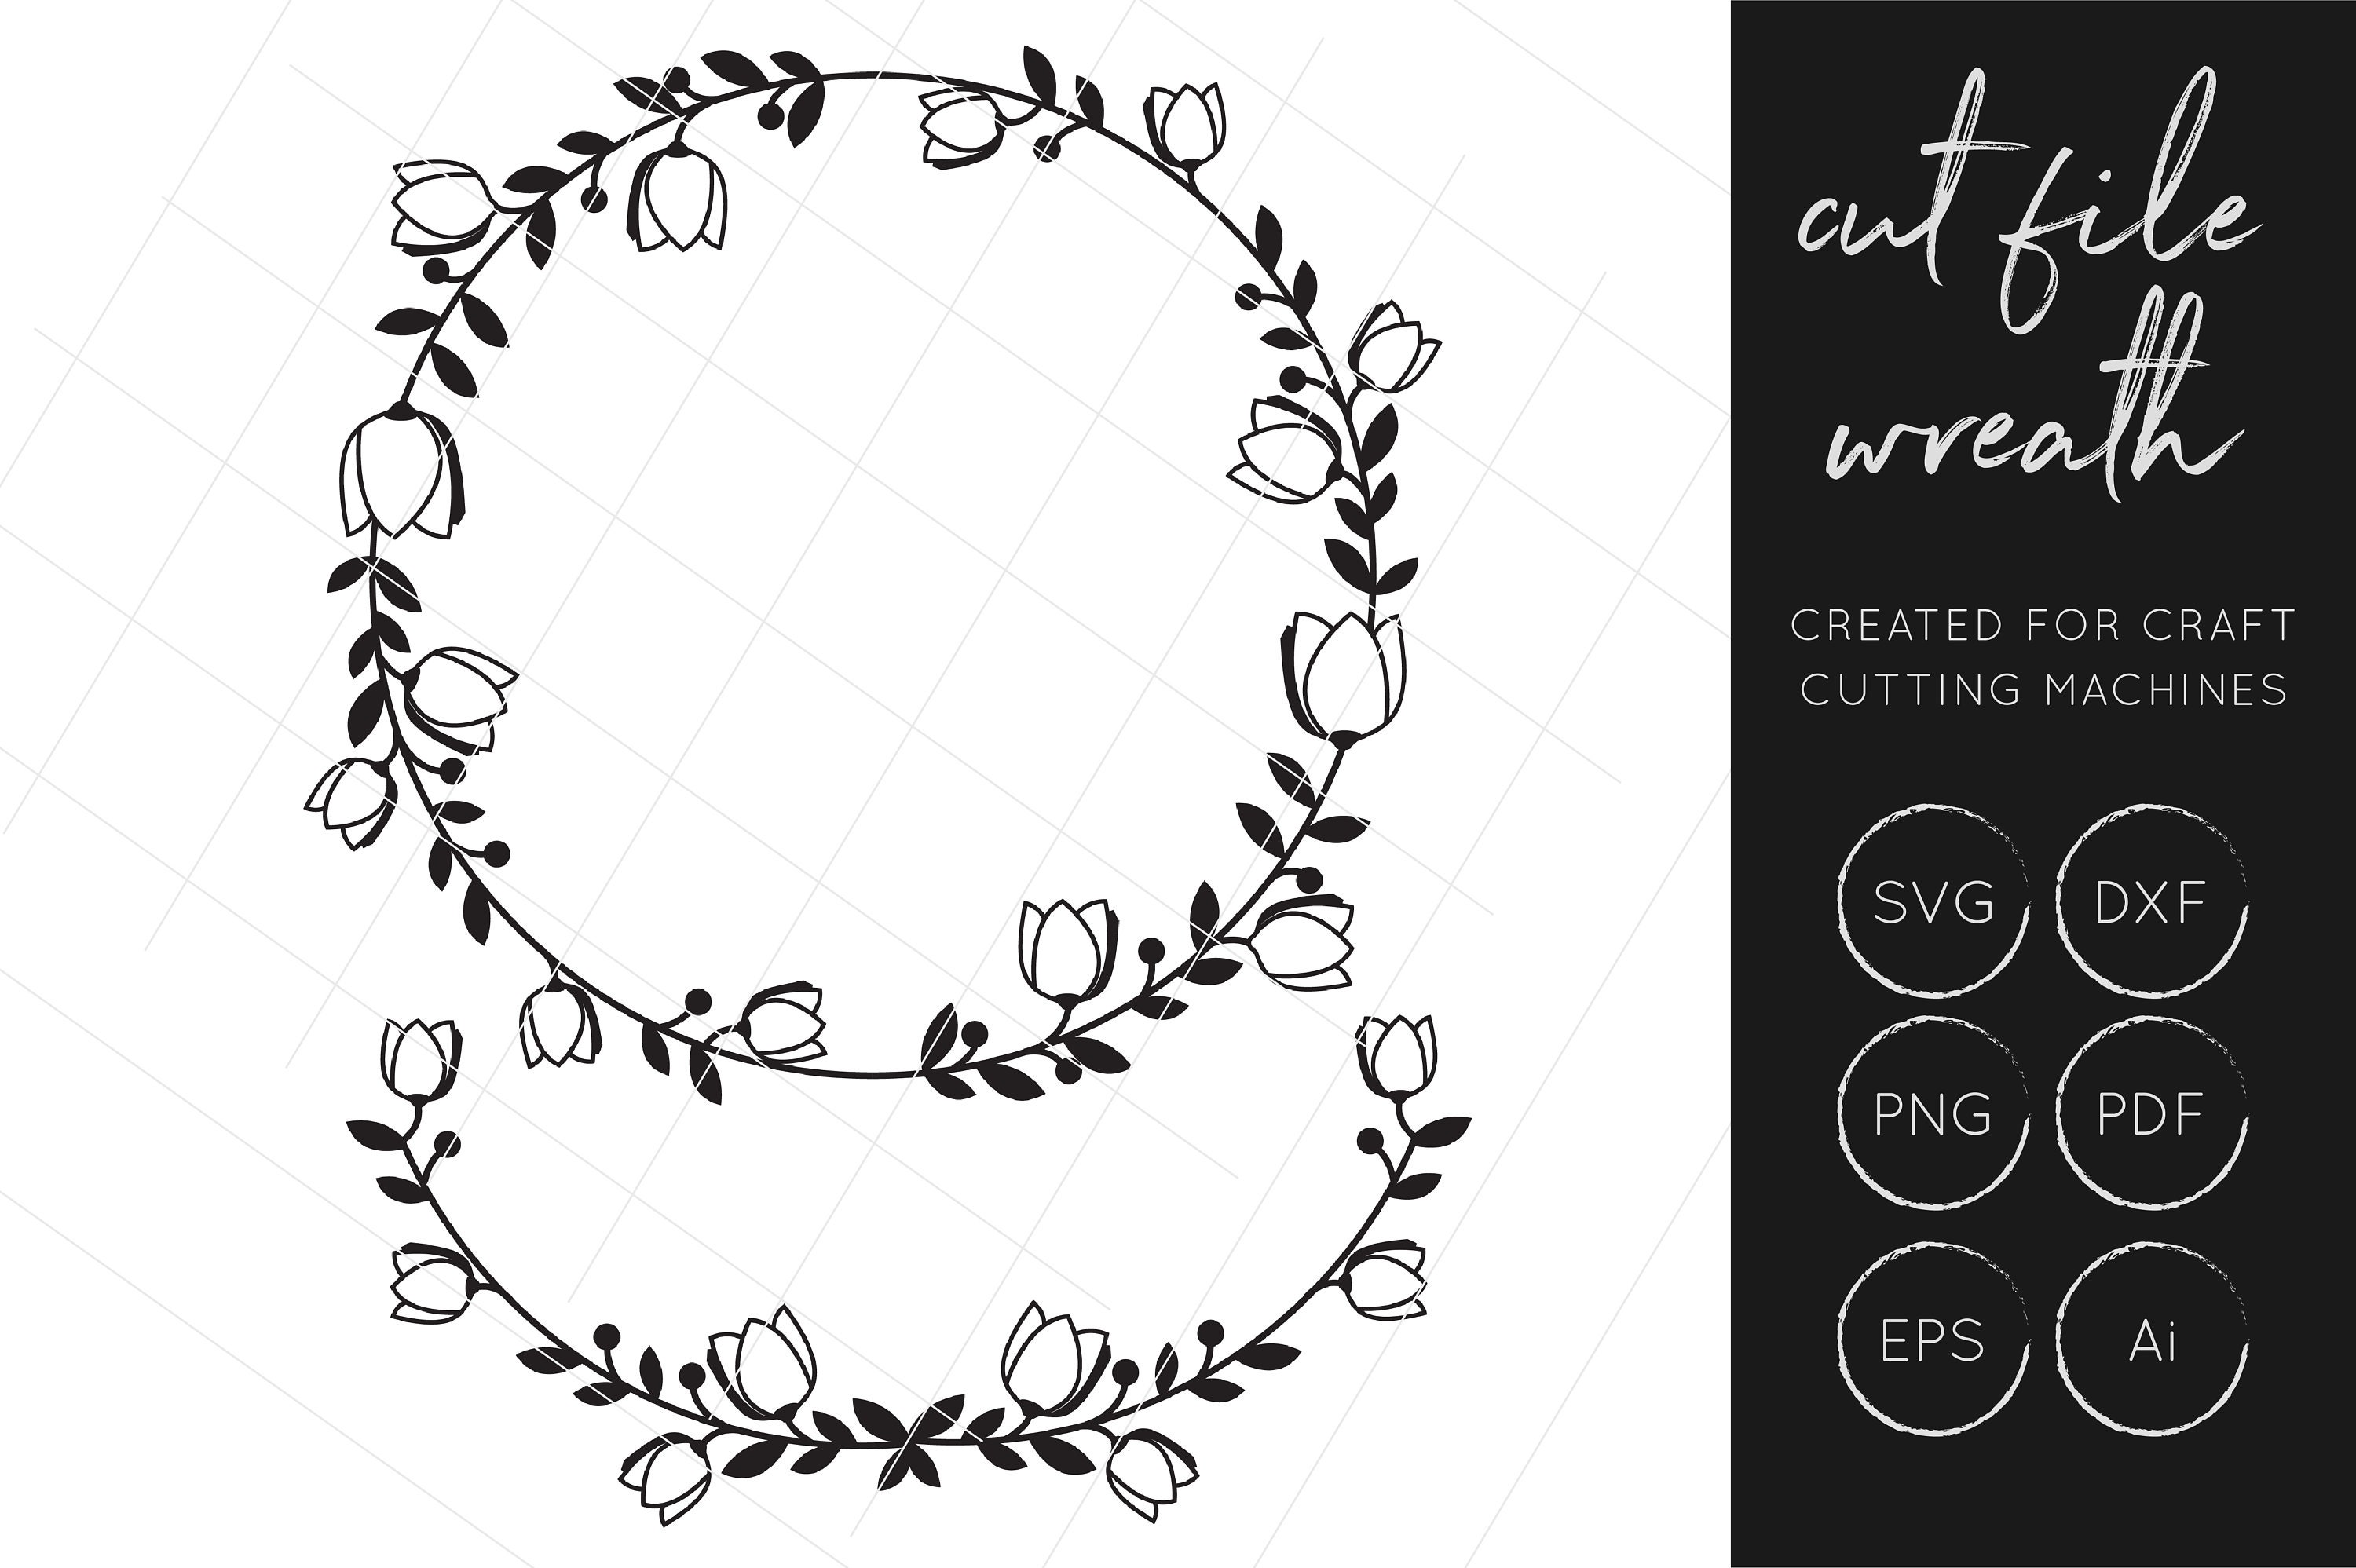 Wreath SVG Laurel SVG Wreath dxf laurel dxf floral wreath